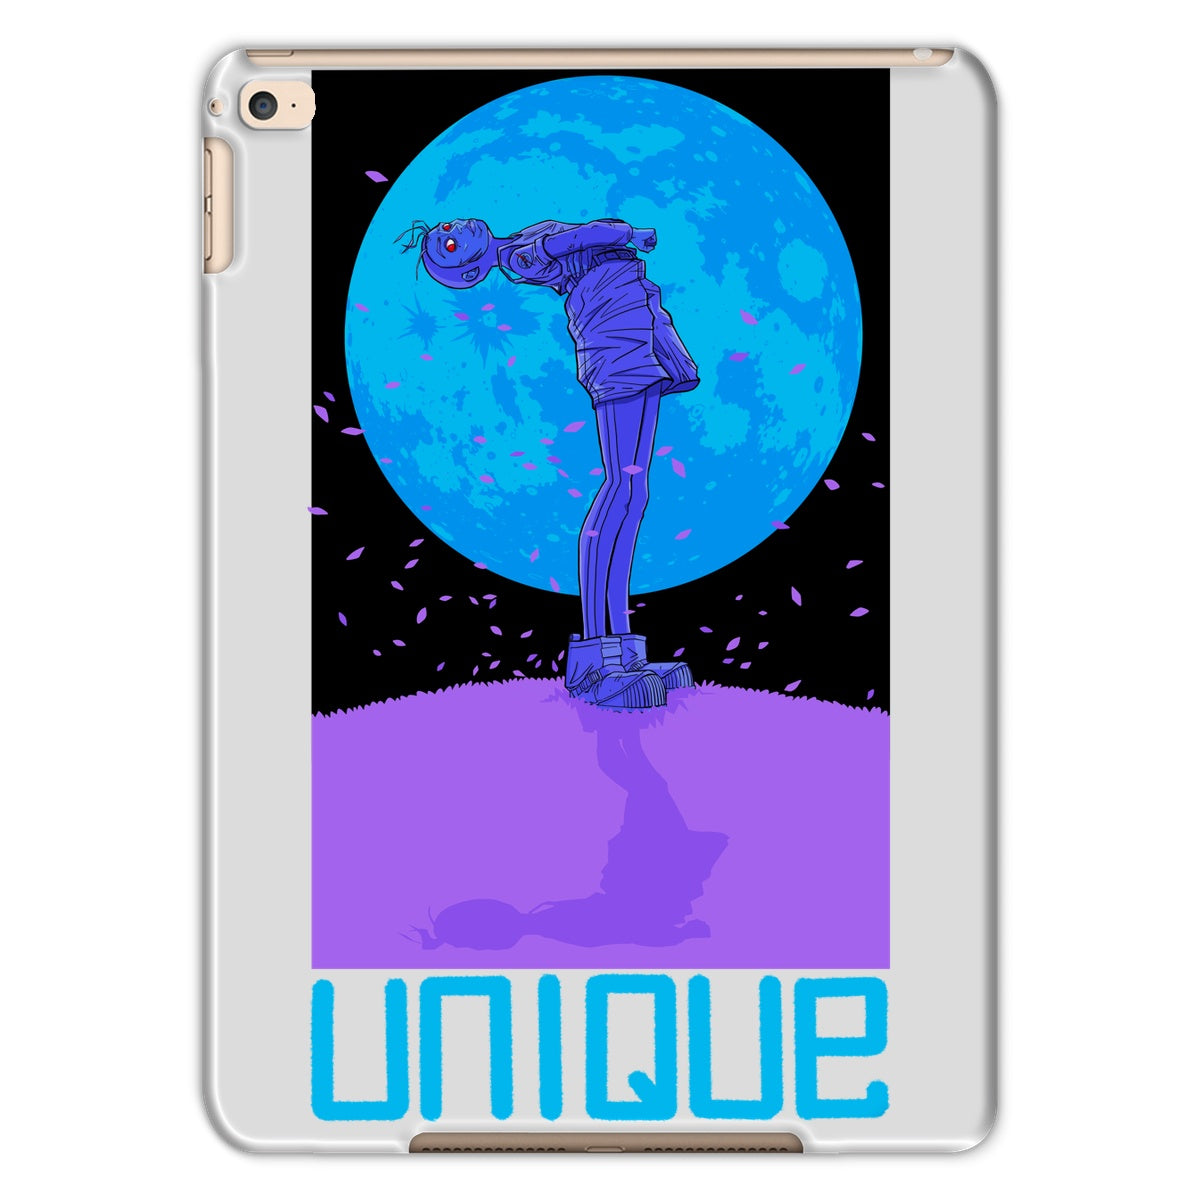 Unique and cool moonchild Tablet Case illustration 